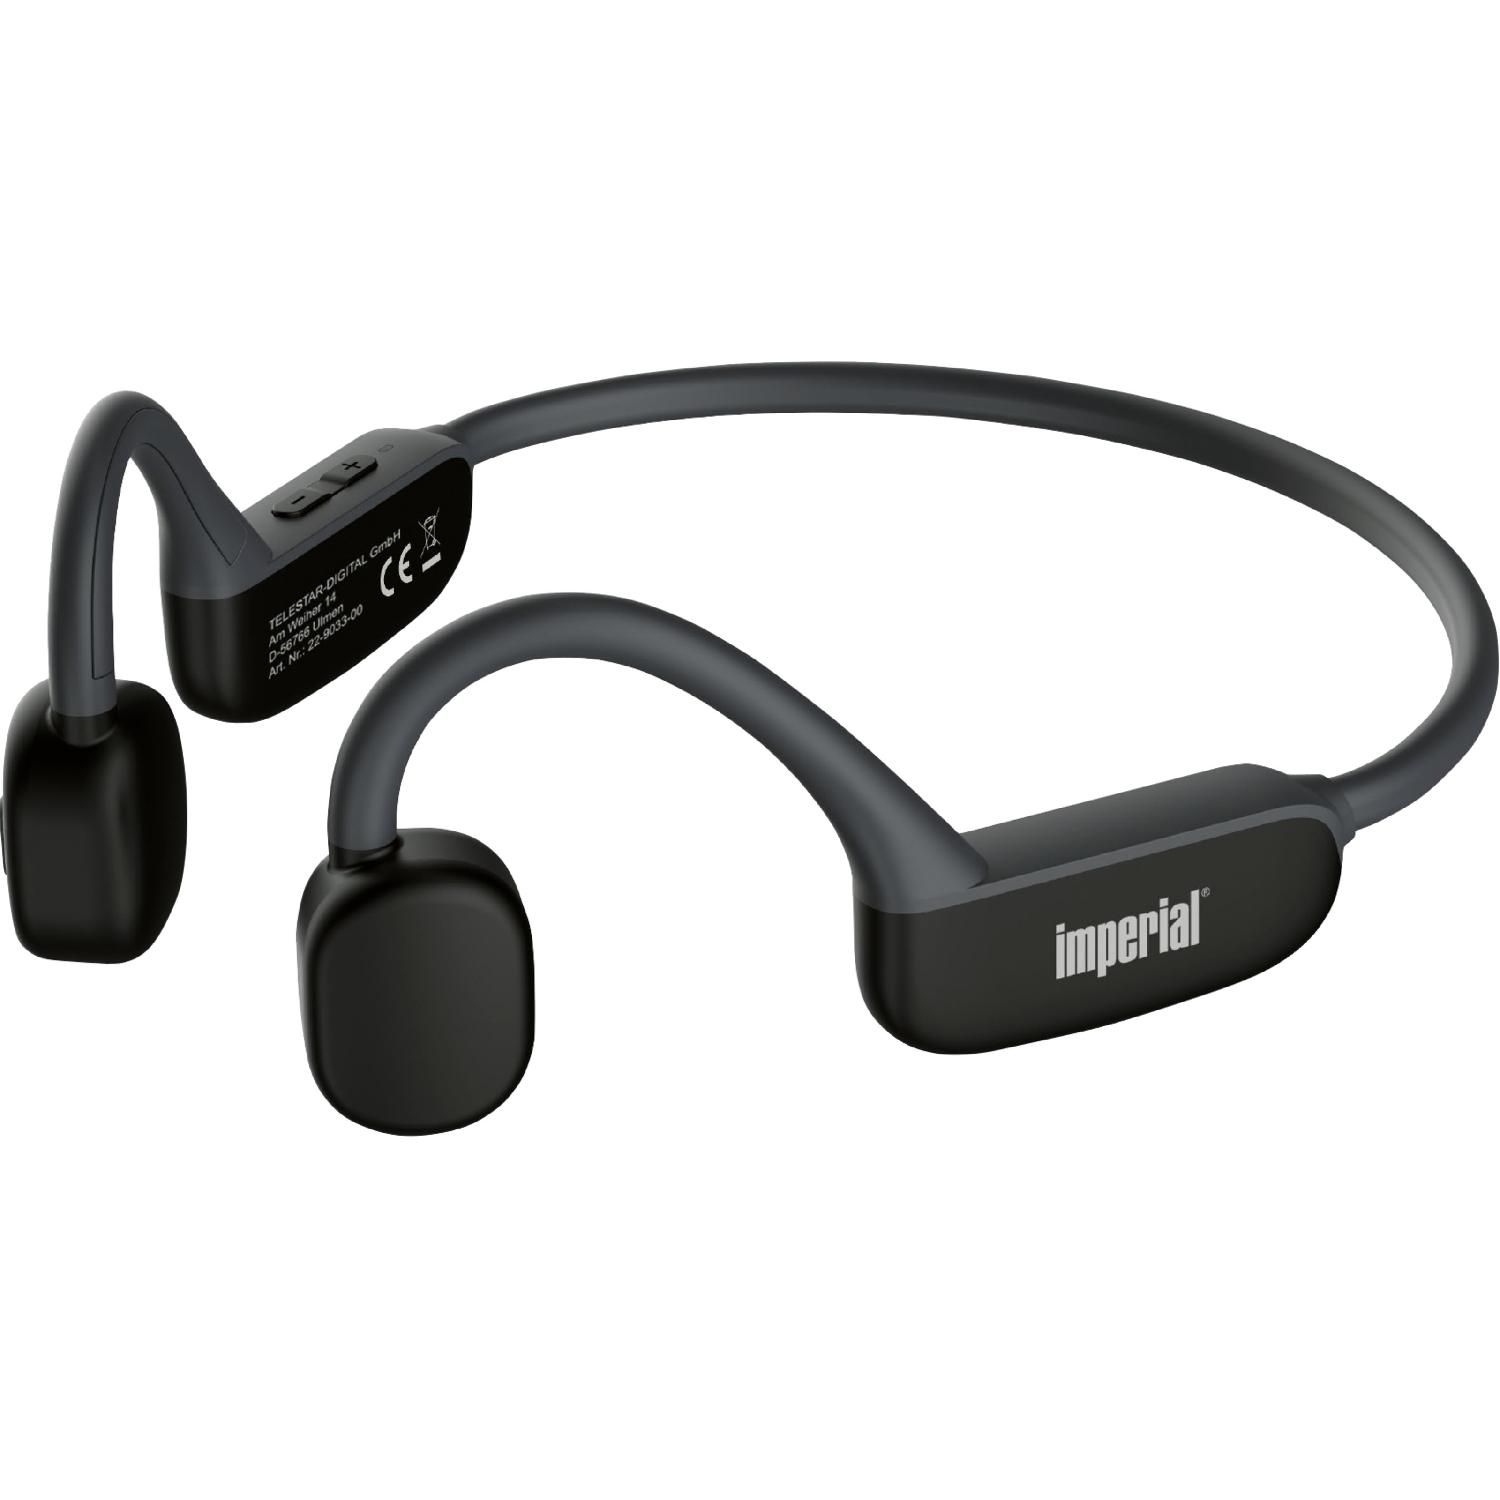 schwarz IMPERIAL bluTC 1, Headset active Neckband